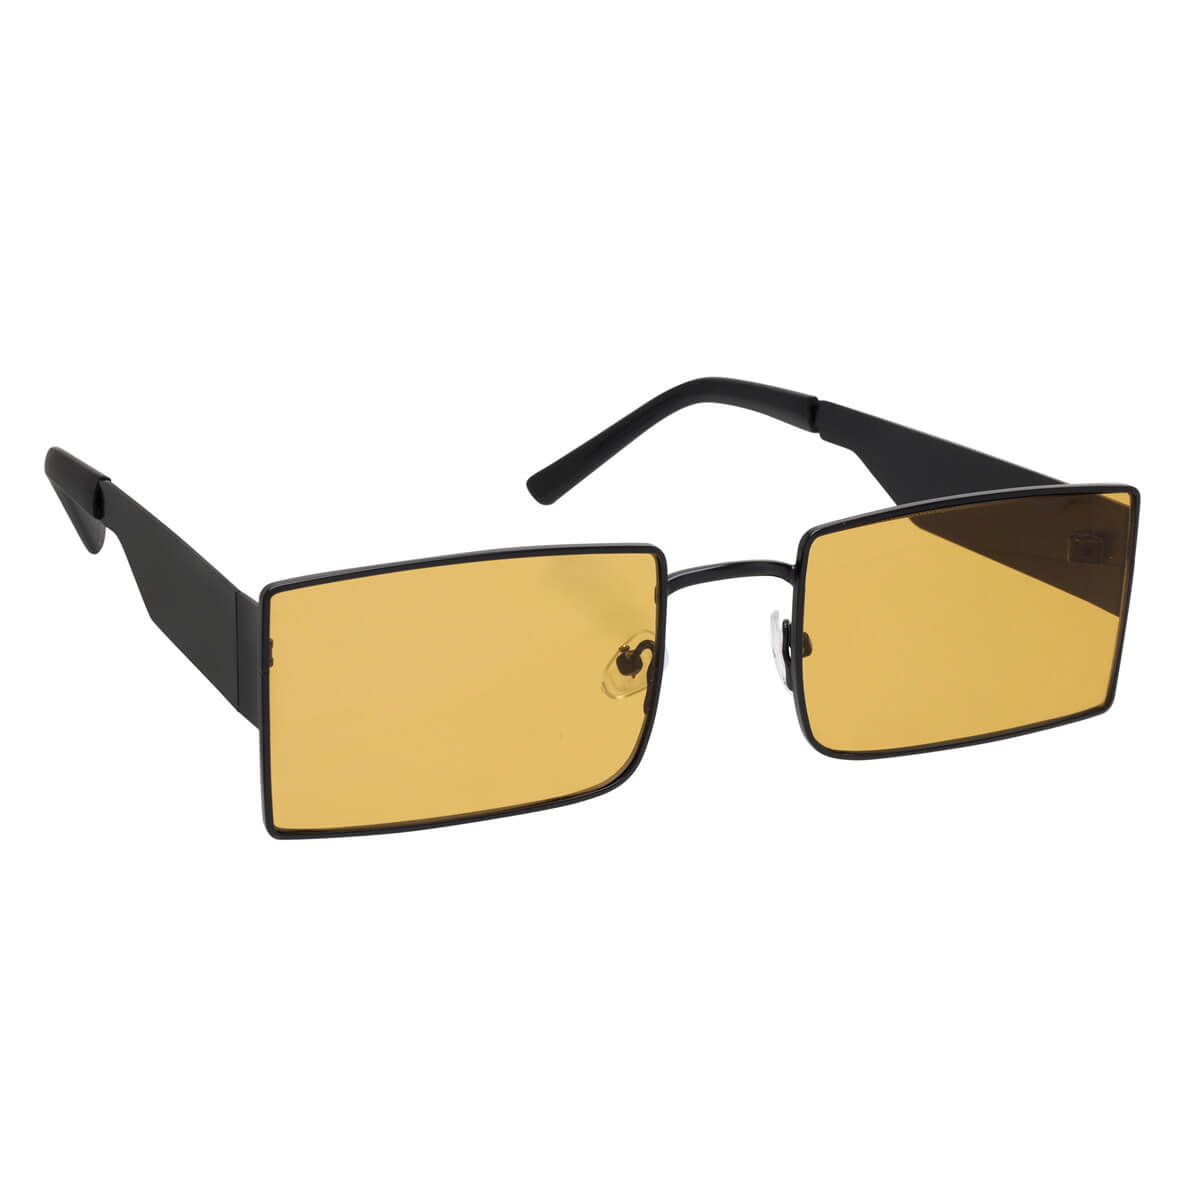 Rectangular sunglasses with metal frames